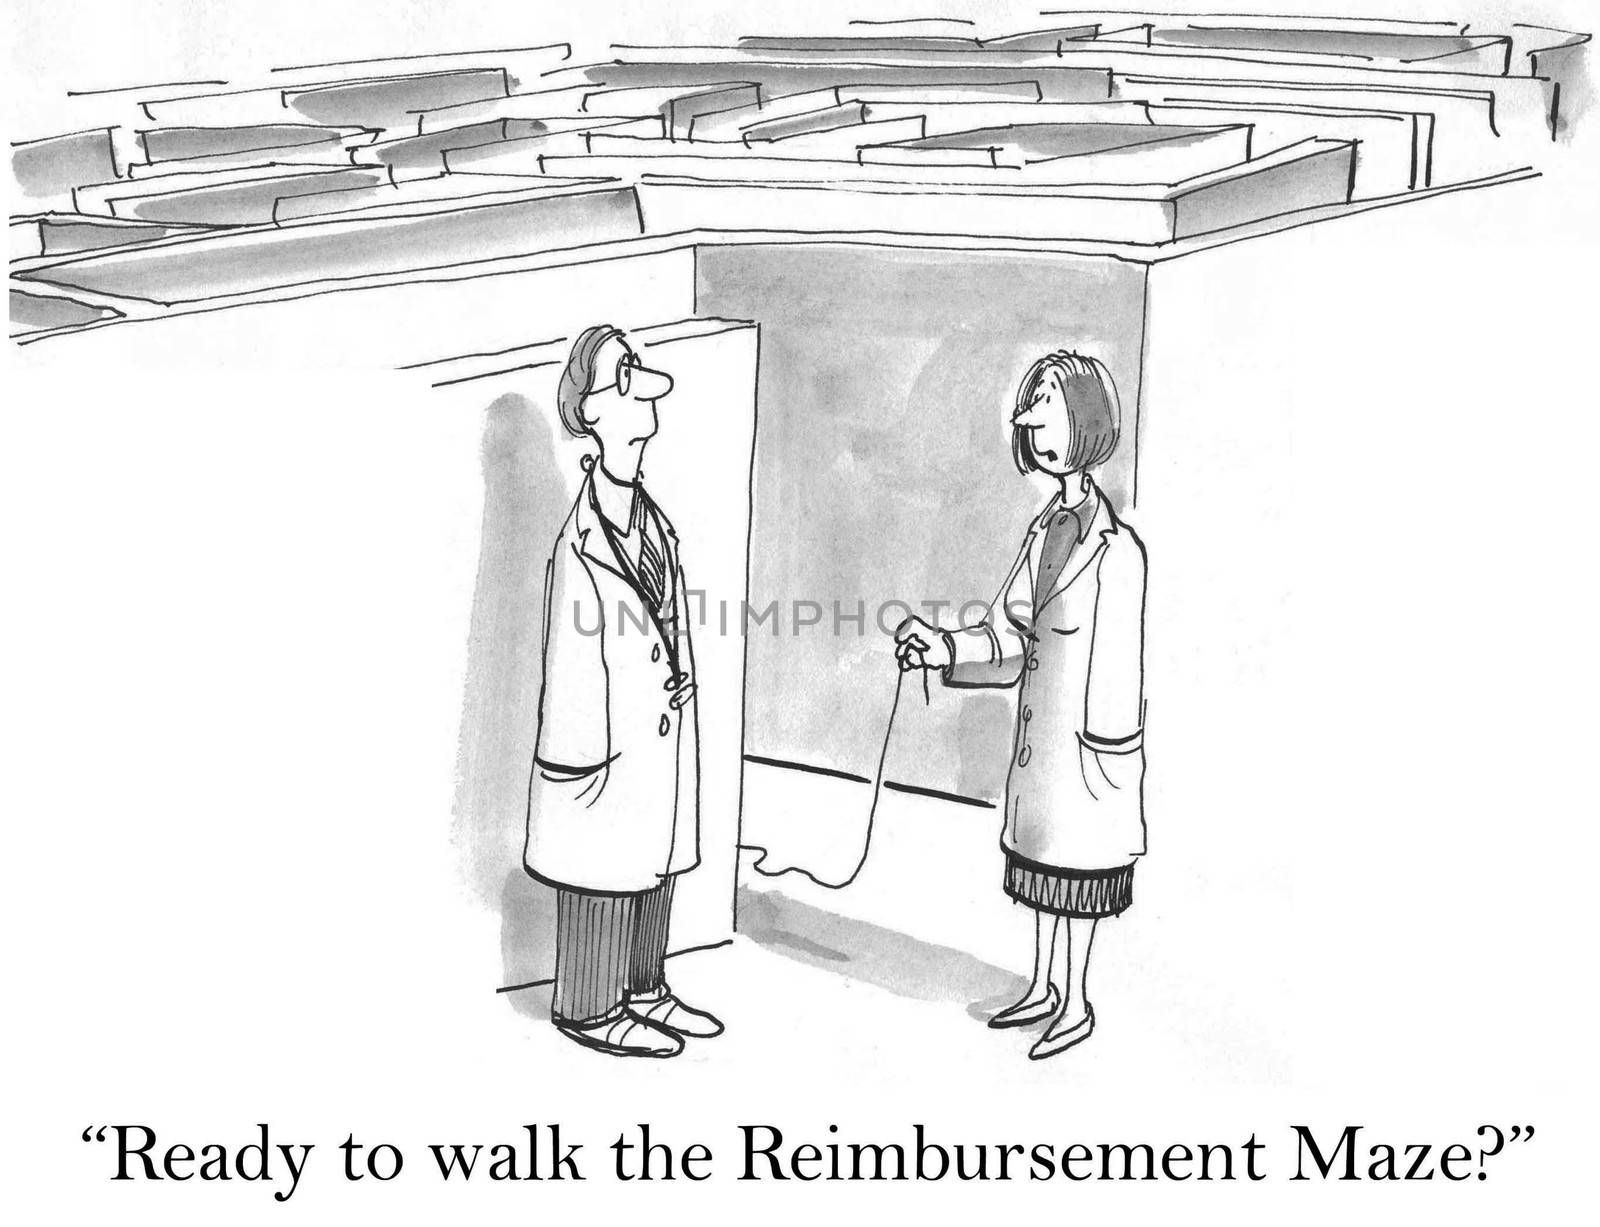 "Ready to walk the reimbursement maze" for doctors.